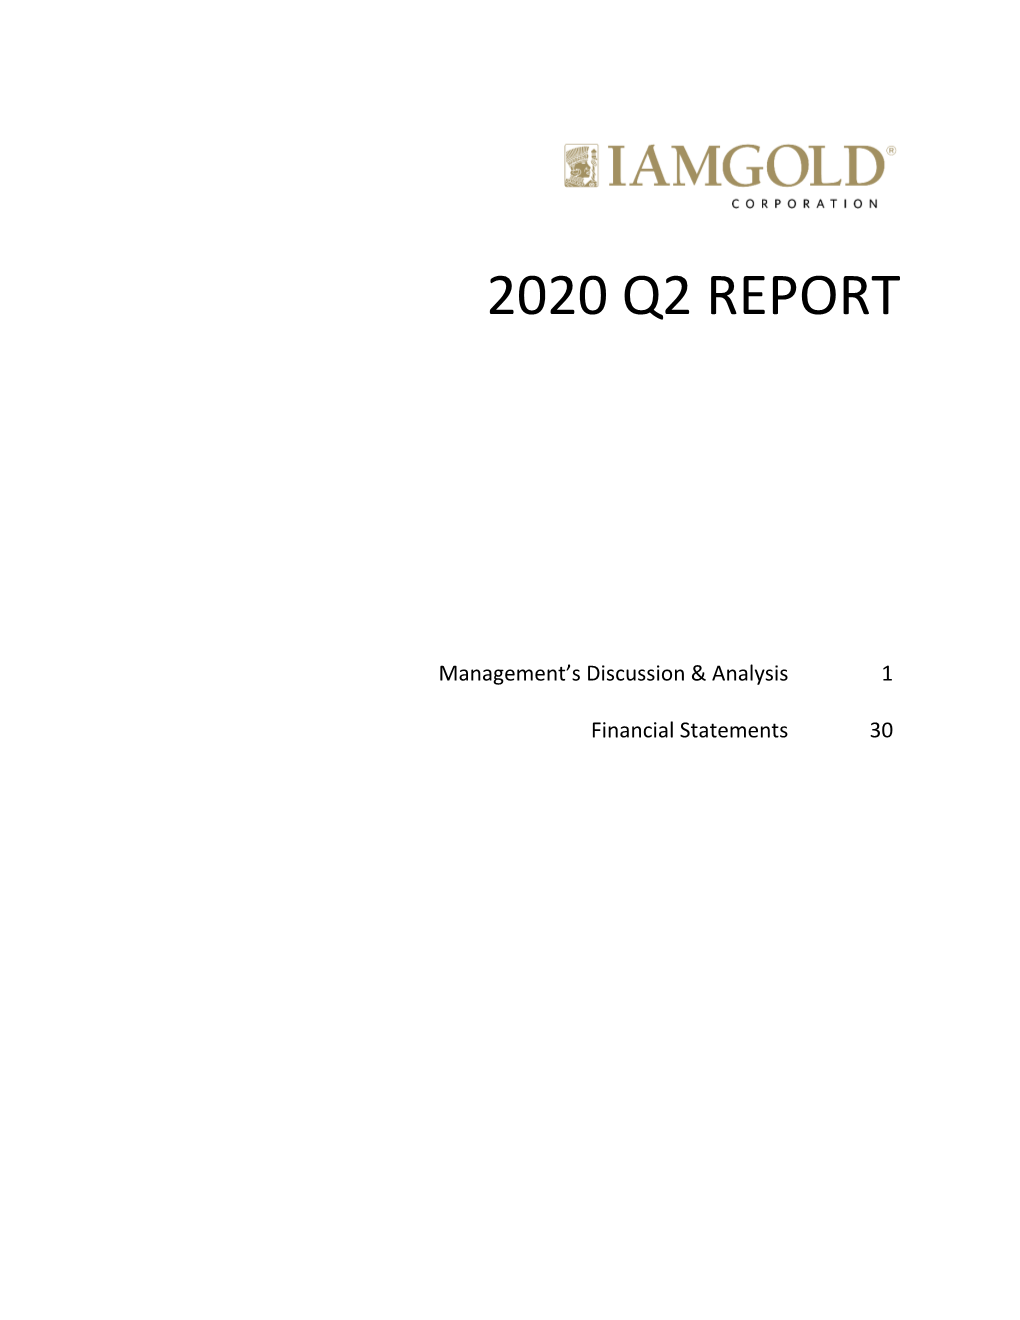 Q2 2020 Management Discussion & Analysis